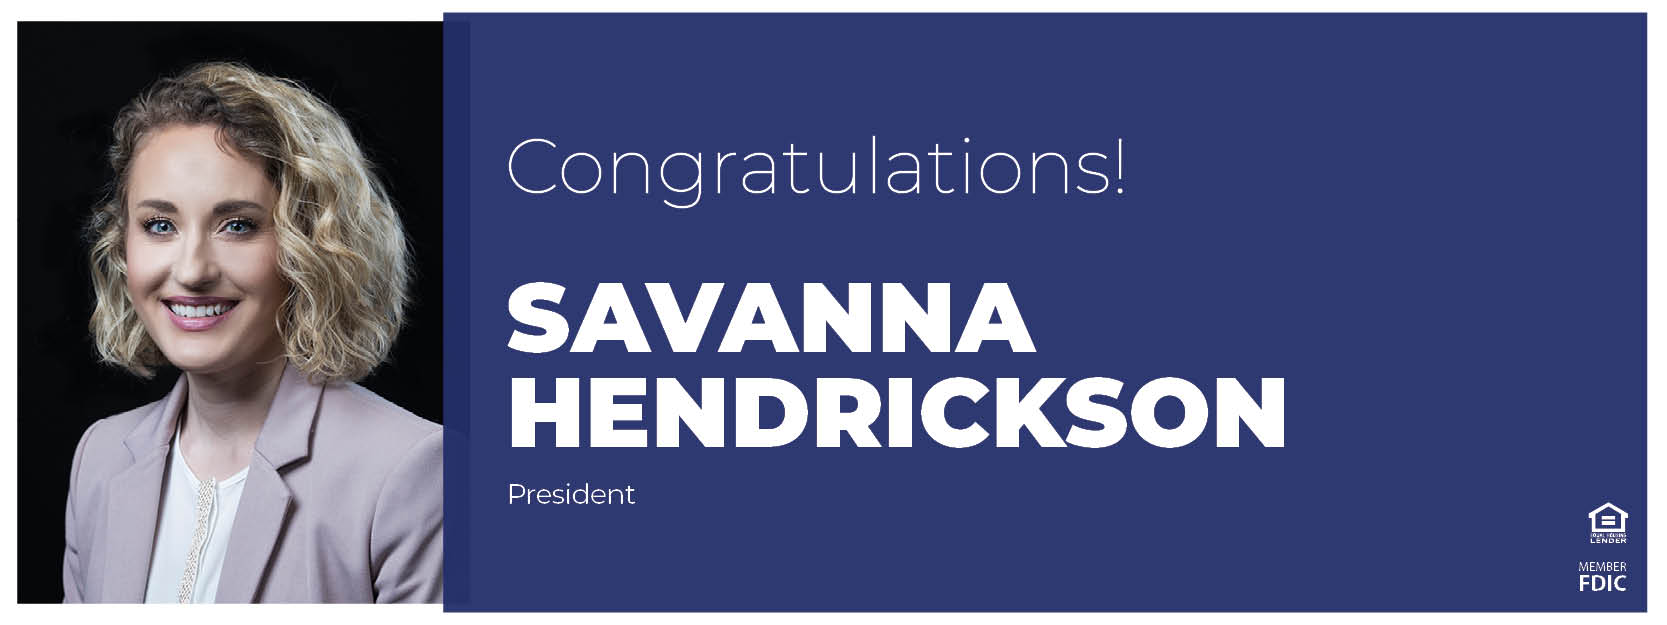 Congratulations Savanna Hendrickson